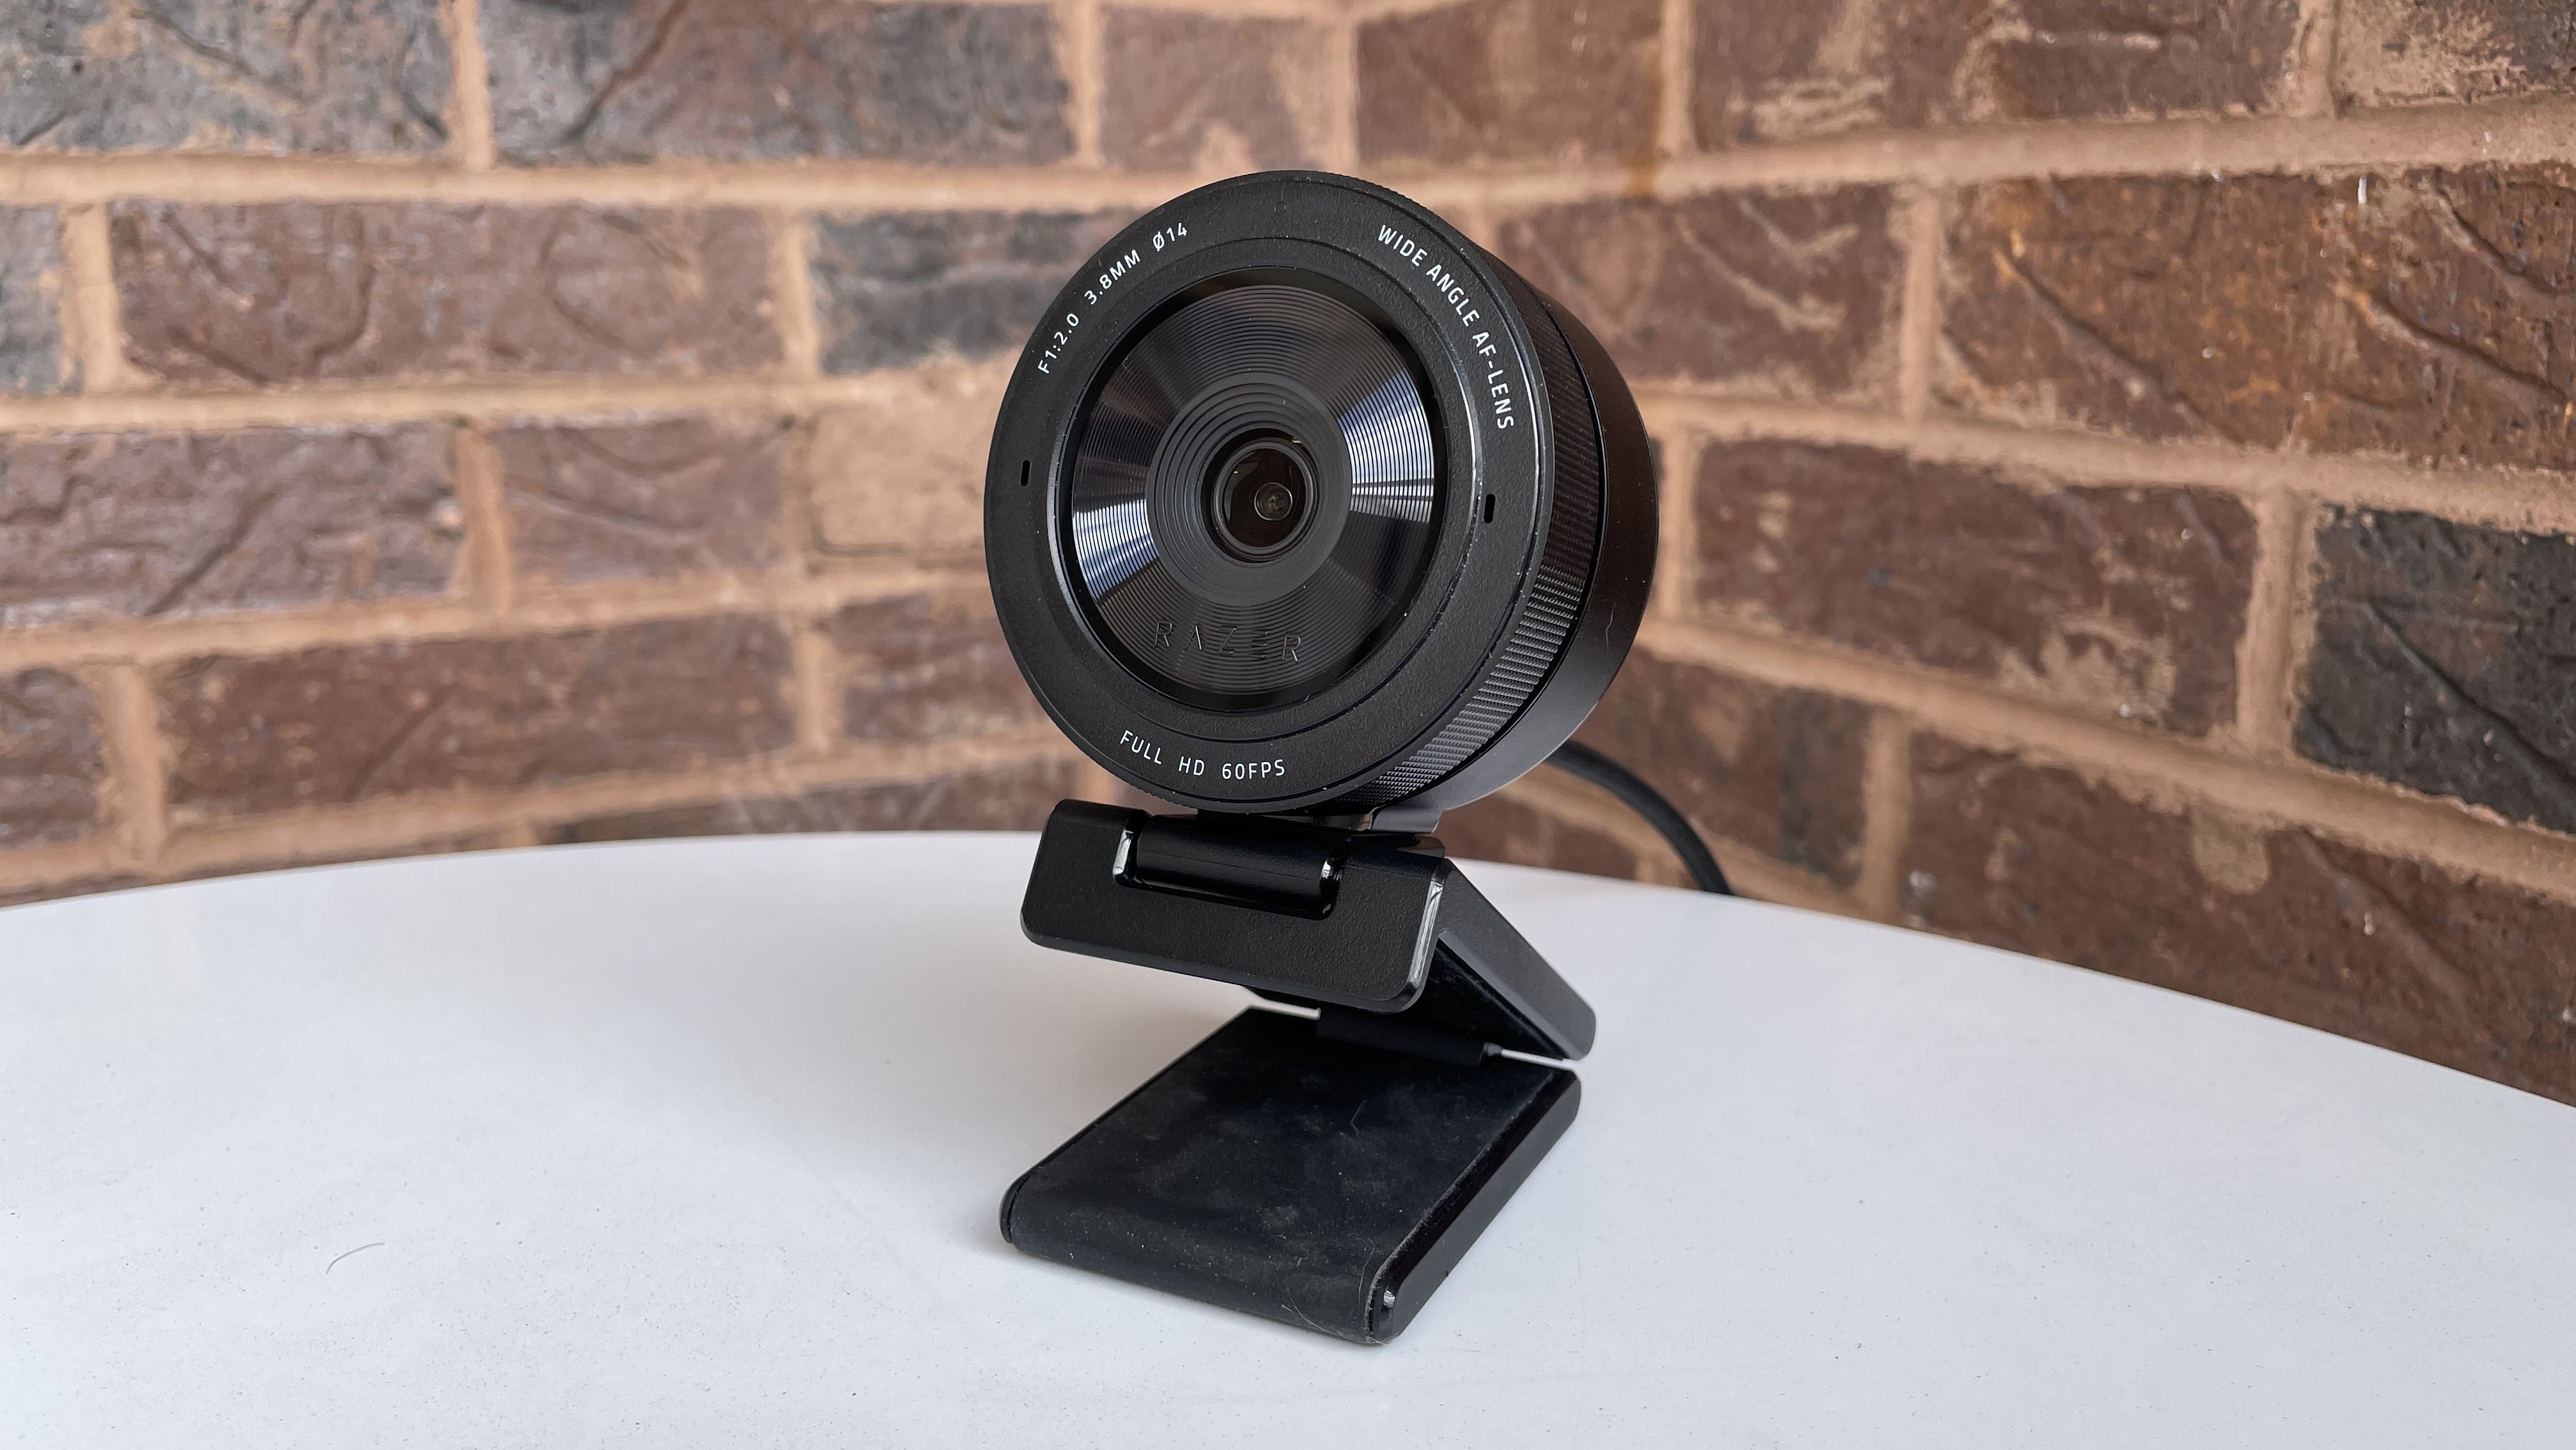 Web Camera Webcam 1080p,wide Angle Full Hd 1080p 60fps Computer